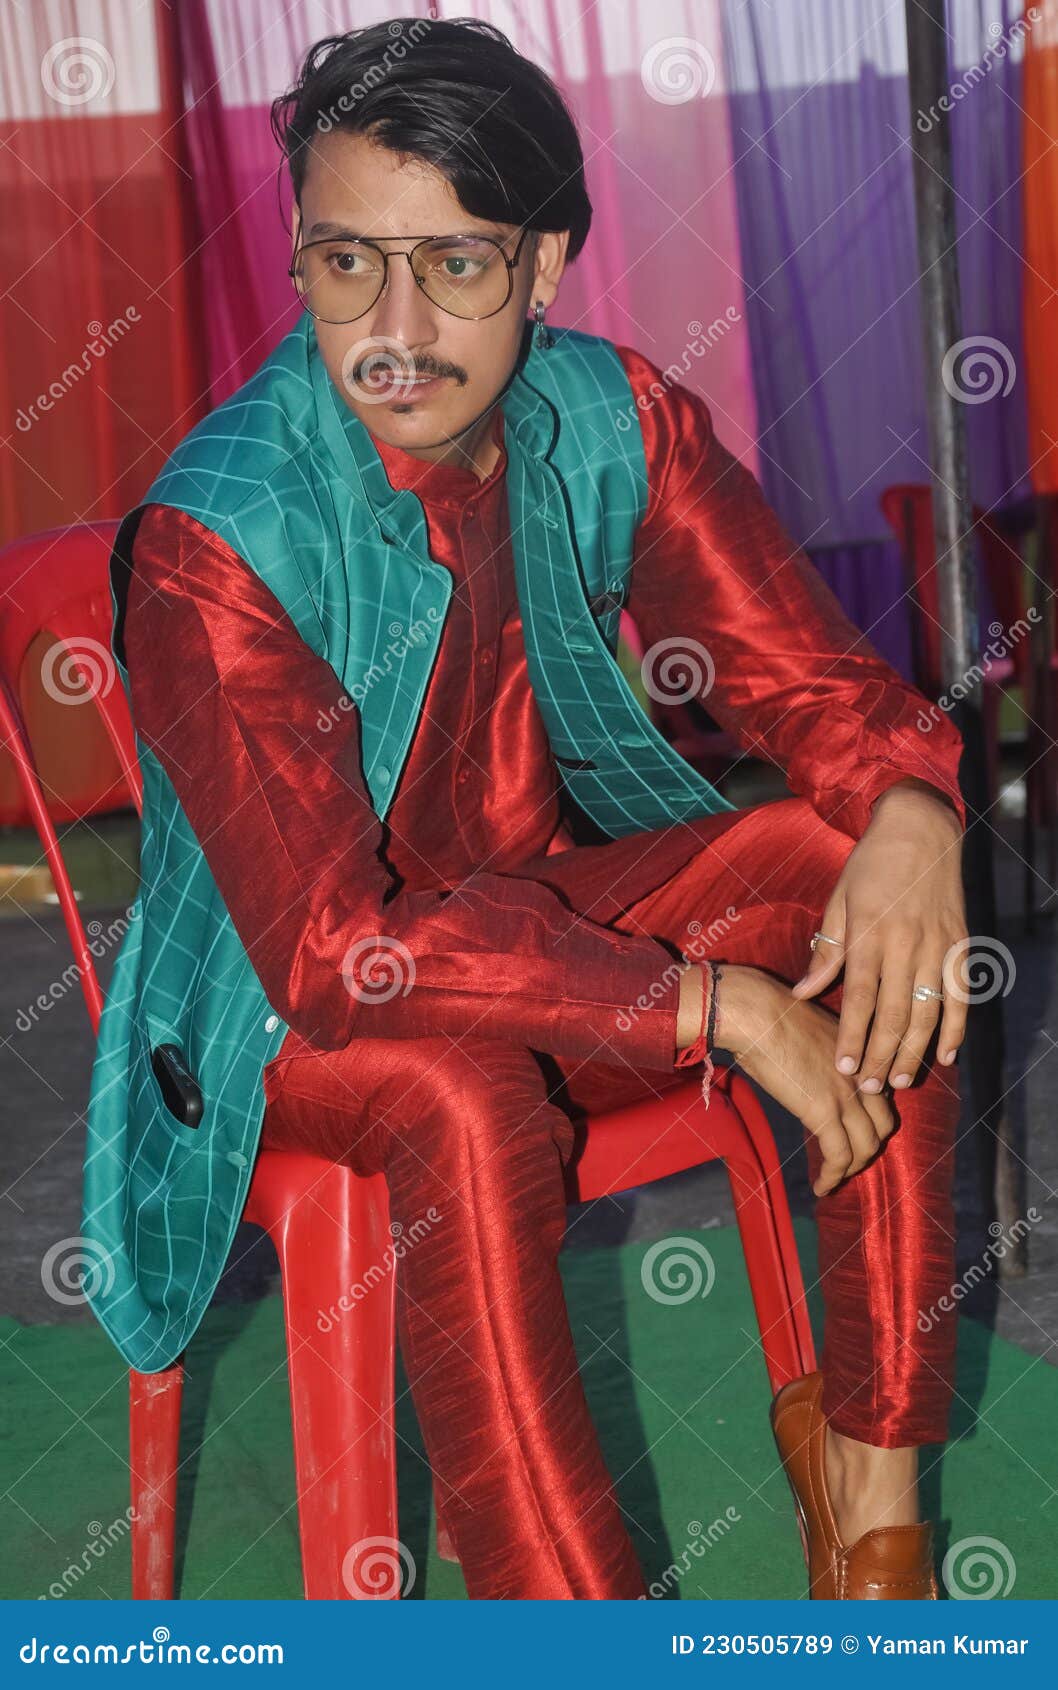 Two Indian Male Models Posing With Ethnic Wear Like Sherwani Jodhpuri Or Kurta  Pyjama While Sitting On Wing Chair Stock Photo - Download Image Now - iStock